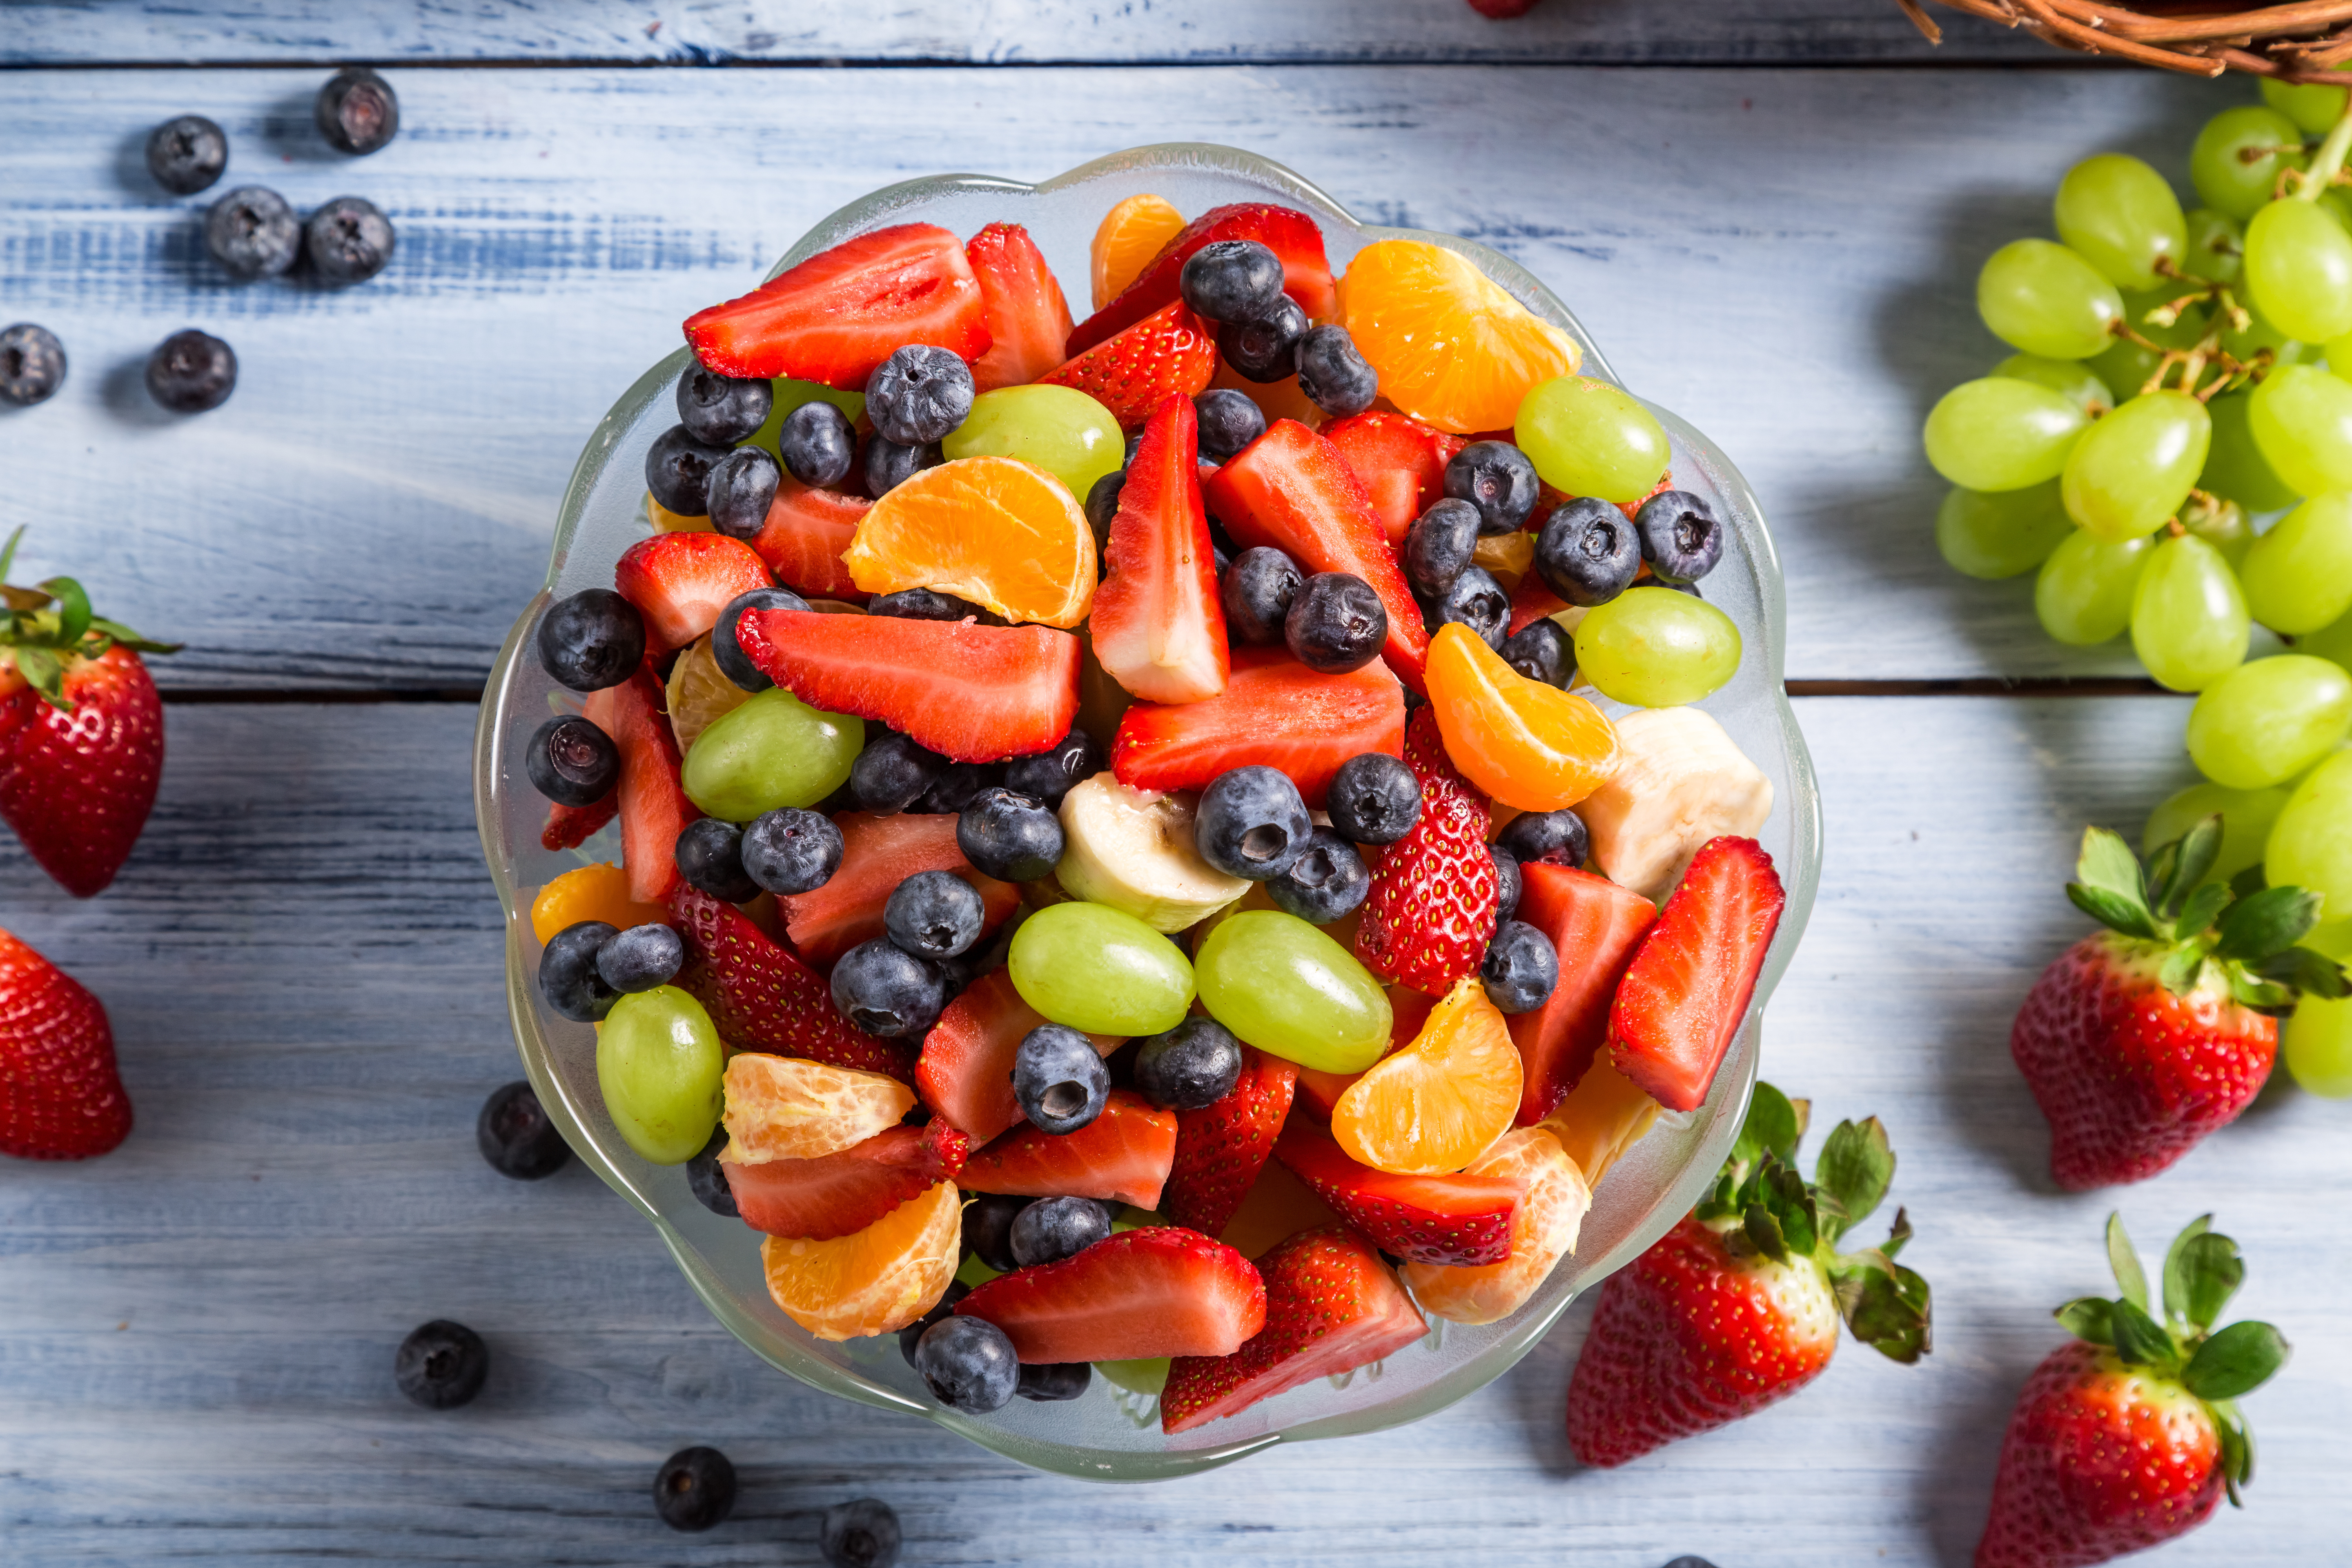 The fruits is tasty. Фруктово Ягодная тарелка. Тарка с фруктами и ягодами. Фрукты и ягоды на тарелке. Фруктовый салат.